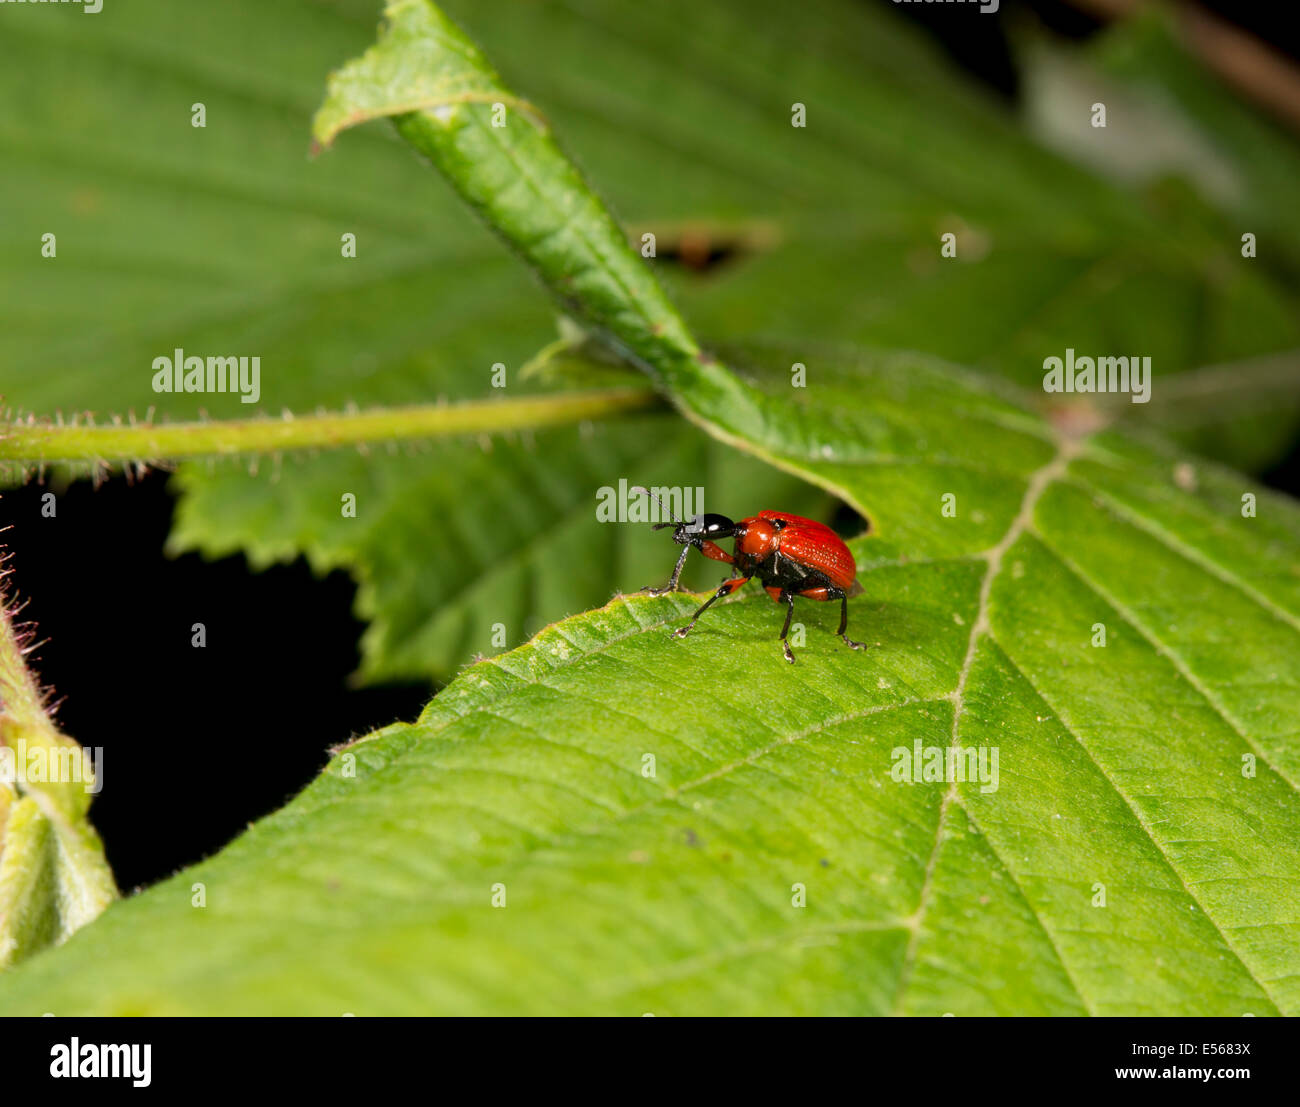 Red beetle Hazel Leaf-roller Apoderus coryli on Hazel leaf Stock Photo